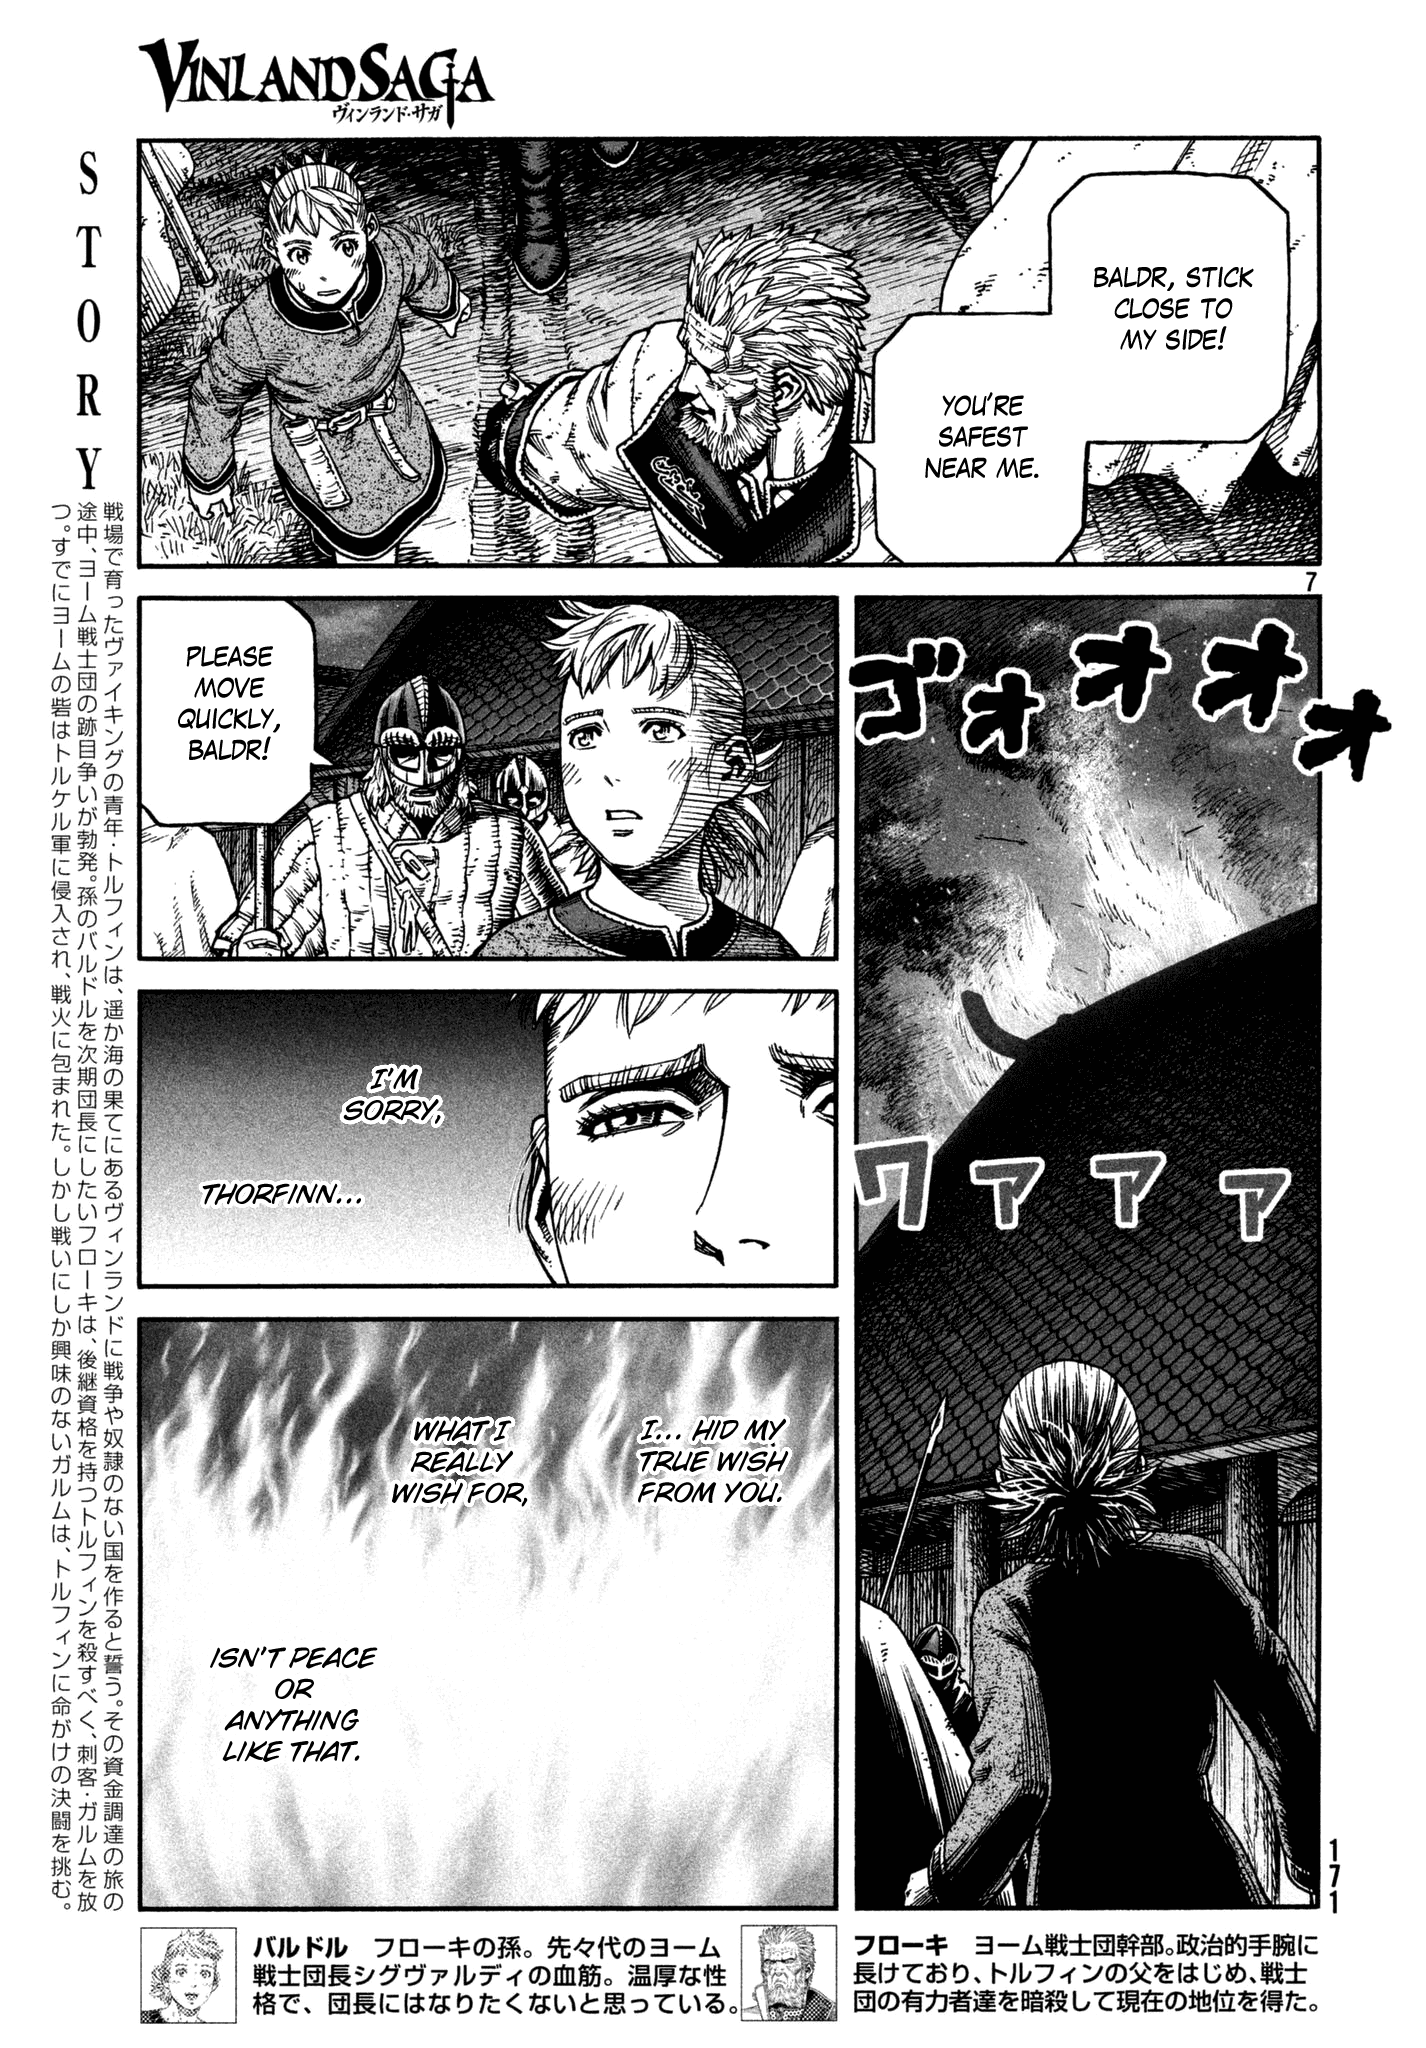 Vinland Saga Manga Manga Chapter - 155 - image 6